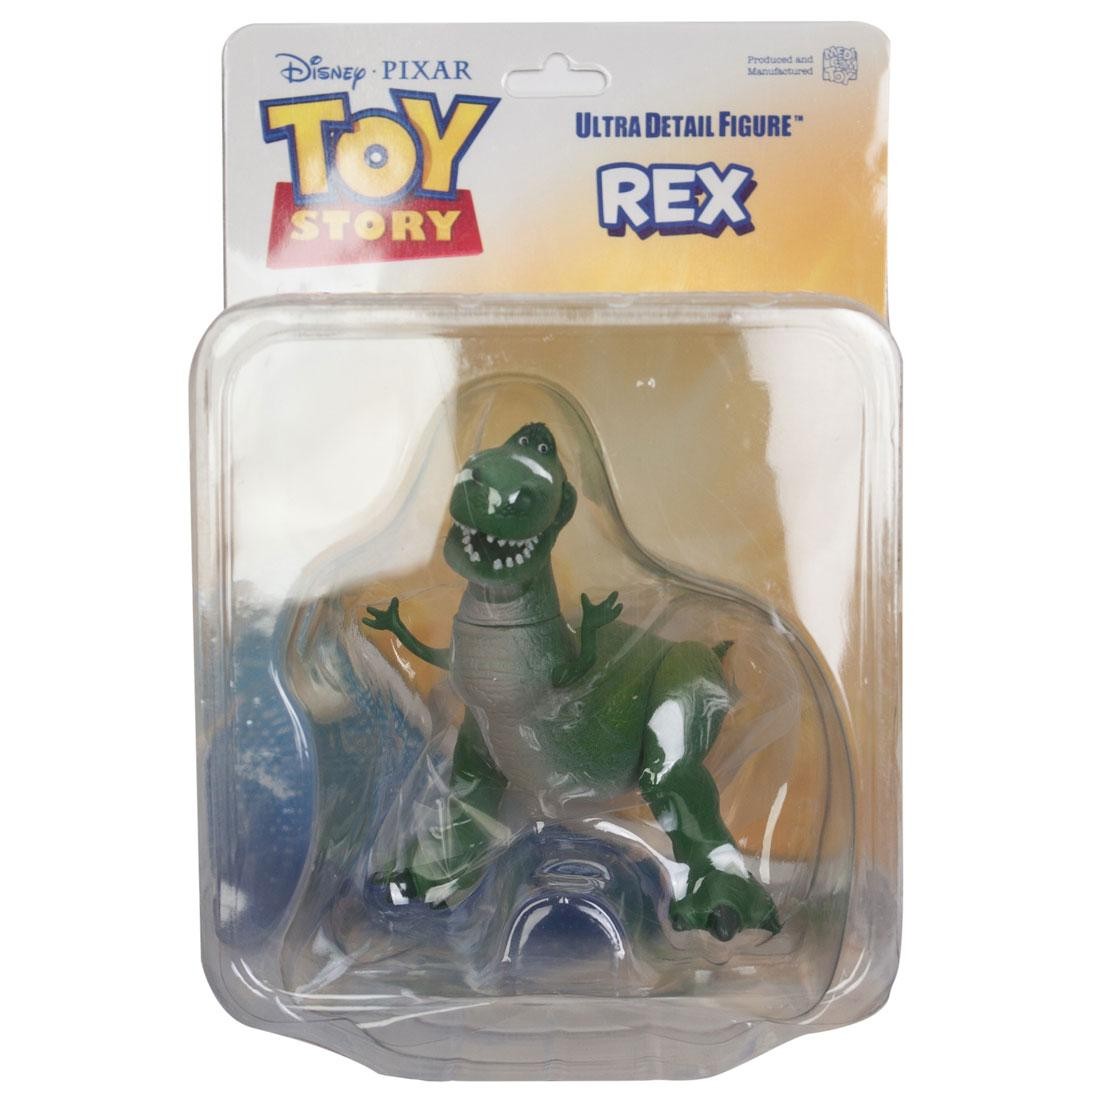 Medicom UDF Toy Story Pixar Series 6 Rex Ultra Detail Figure (green)